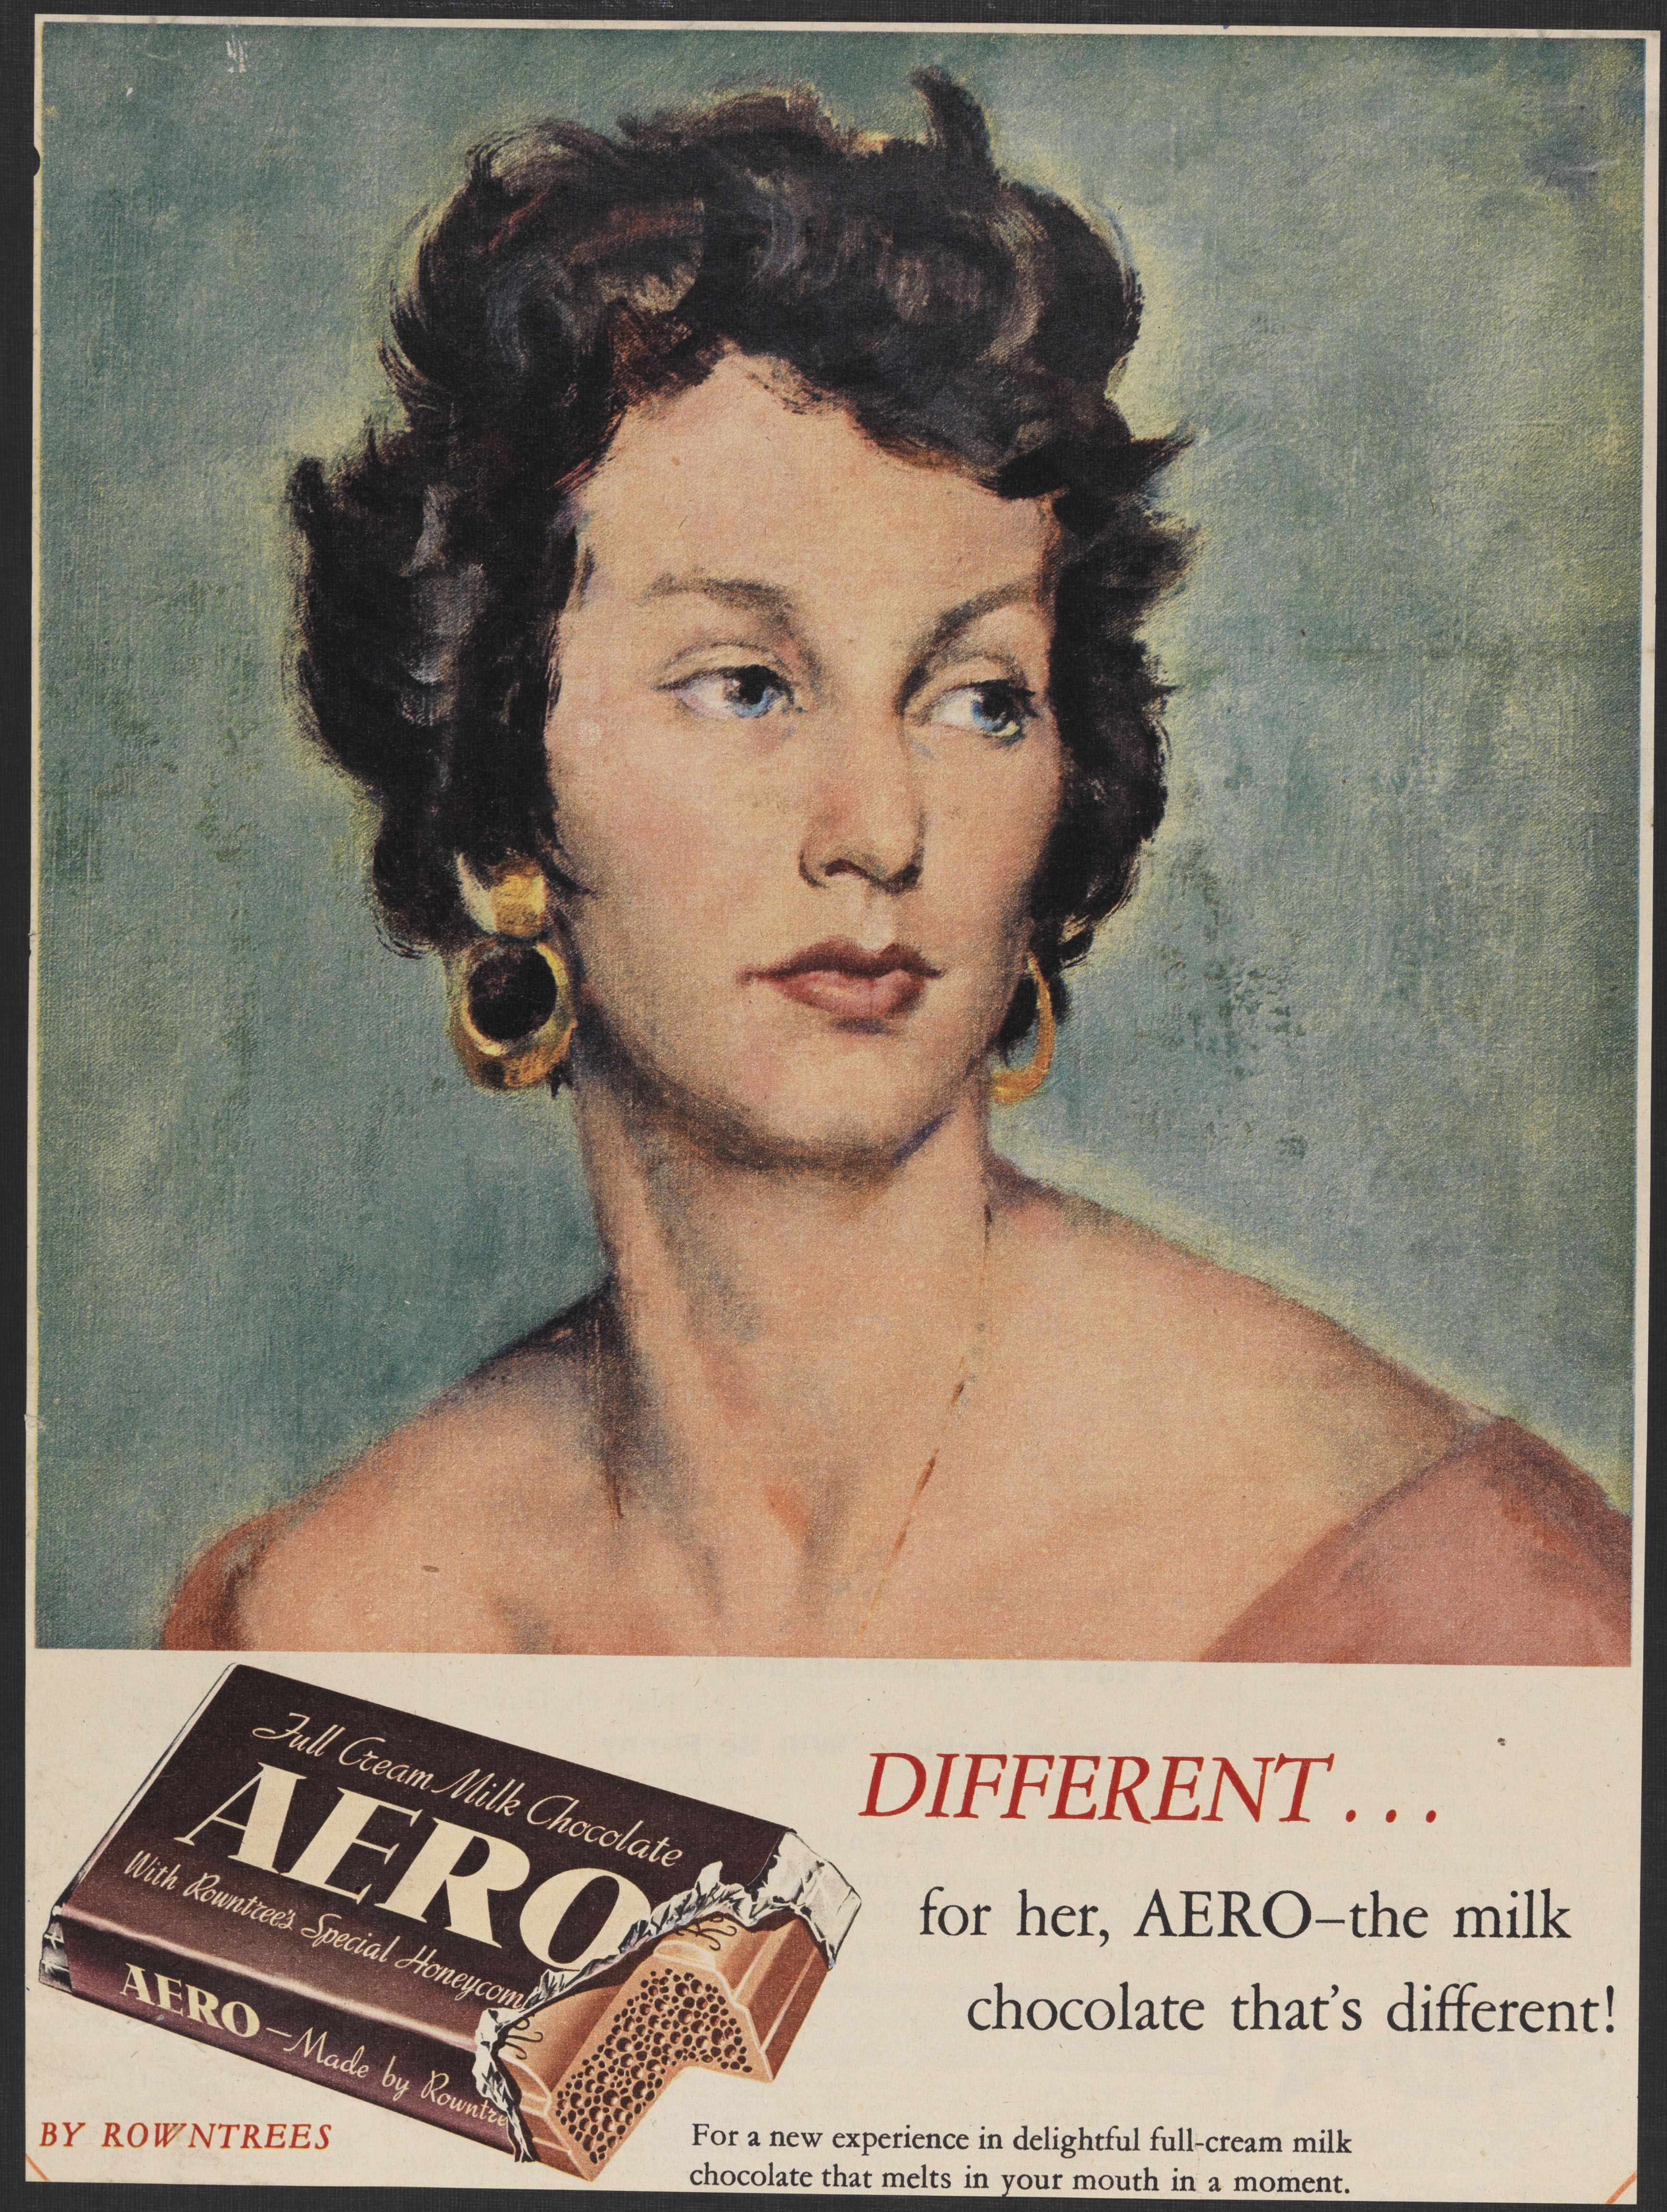 Image: Aero Advert 1955. With kind permission of Nestlé UK.